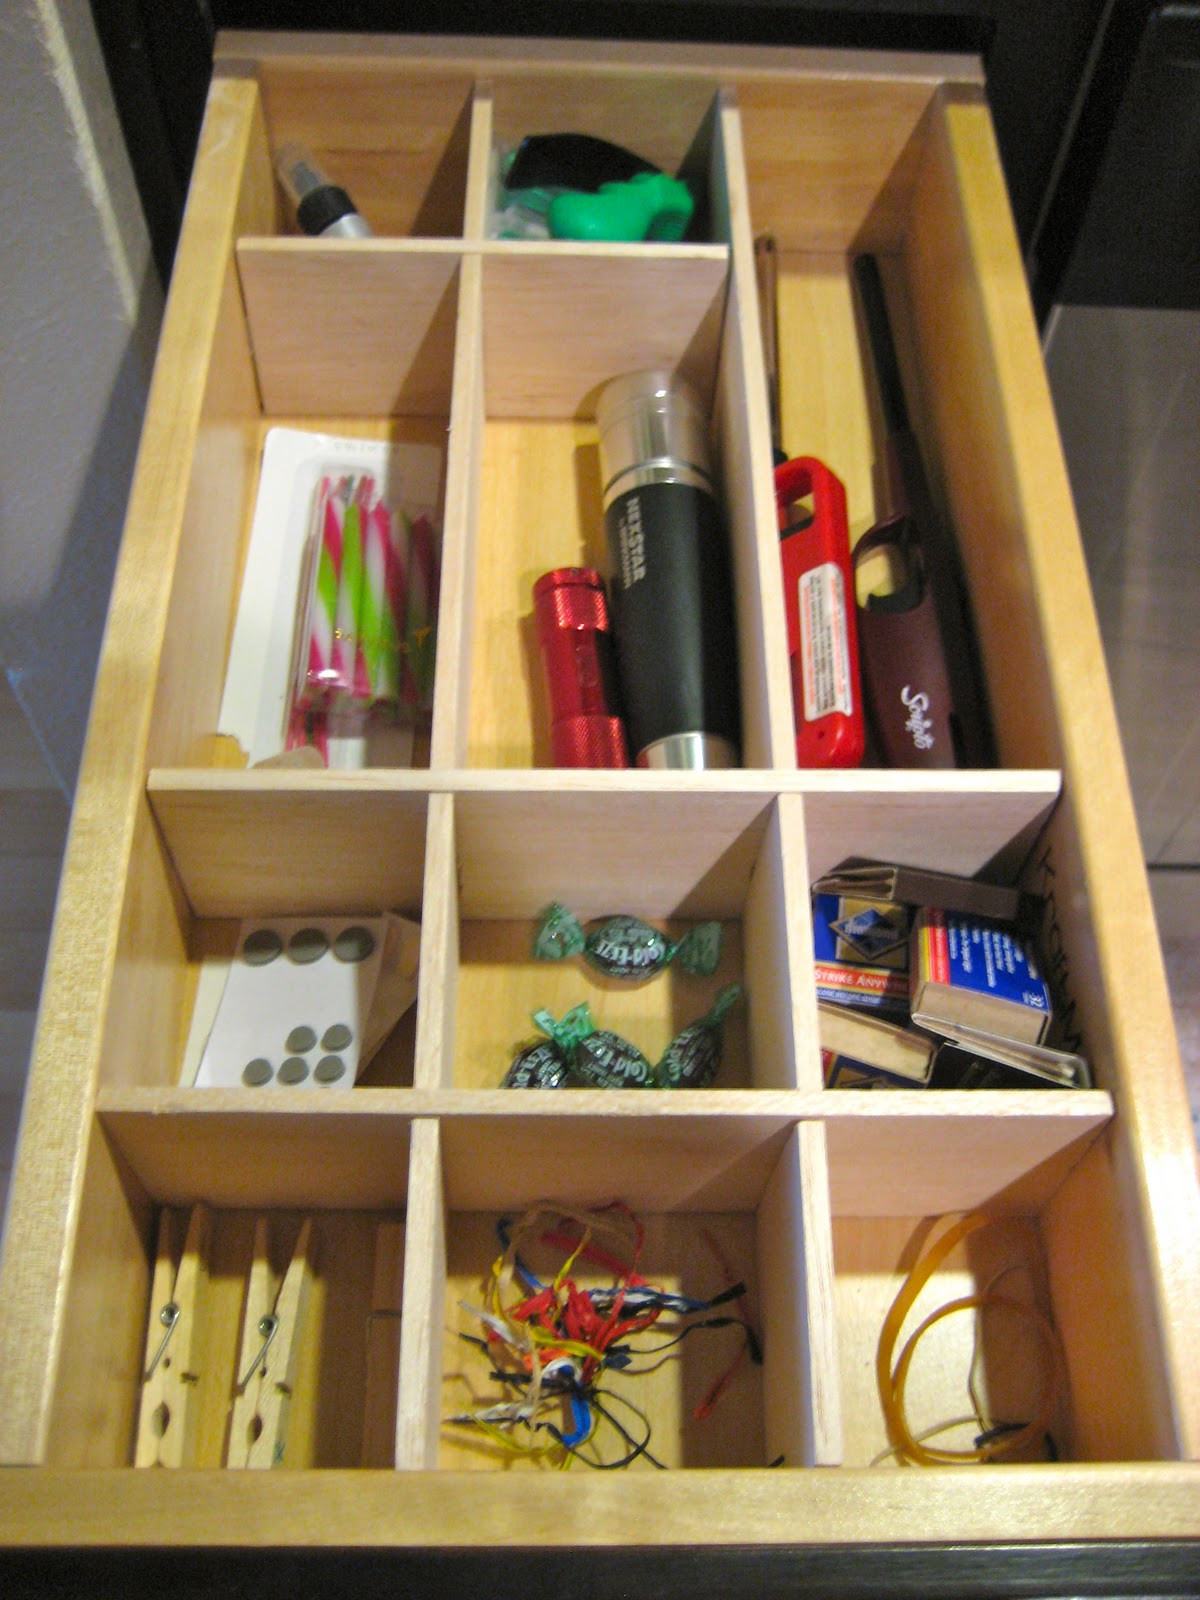 Best ideas about Drawer Organizer DIY
. Save or Pin C R A F T 72 Drawer Organizer Part 2 C R A F T Now.